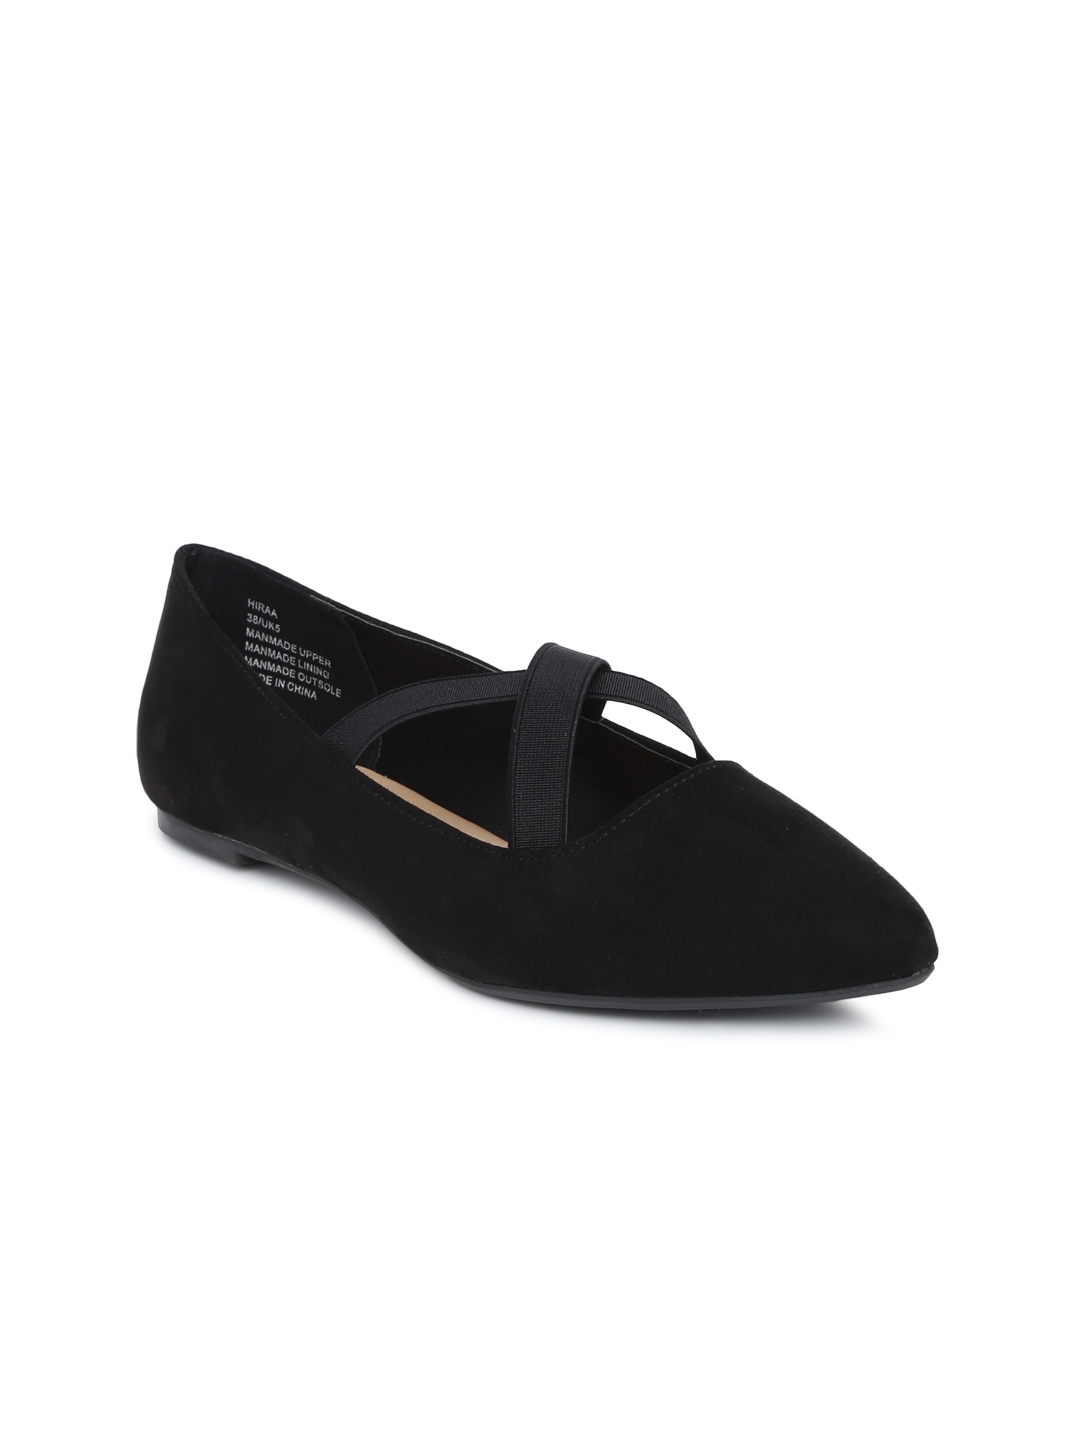 Buy Dune London Women Black Solid Ballerinas - Flats for Women 7797845 ...